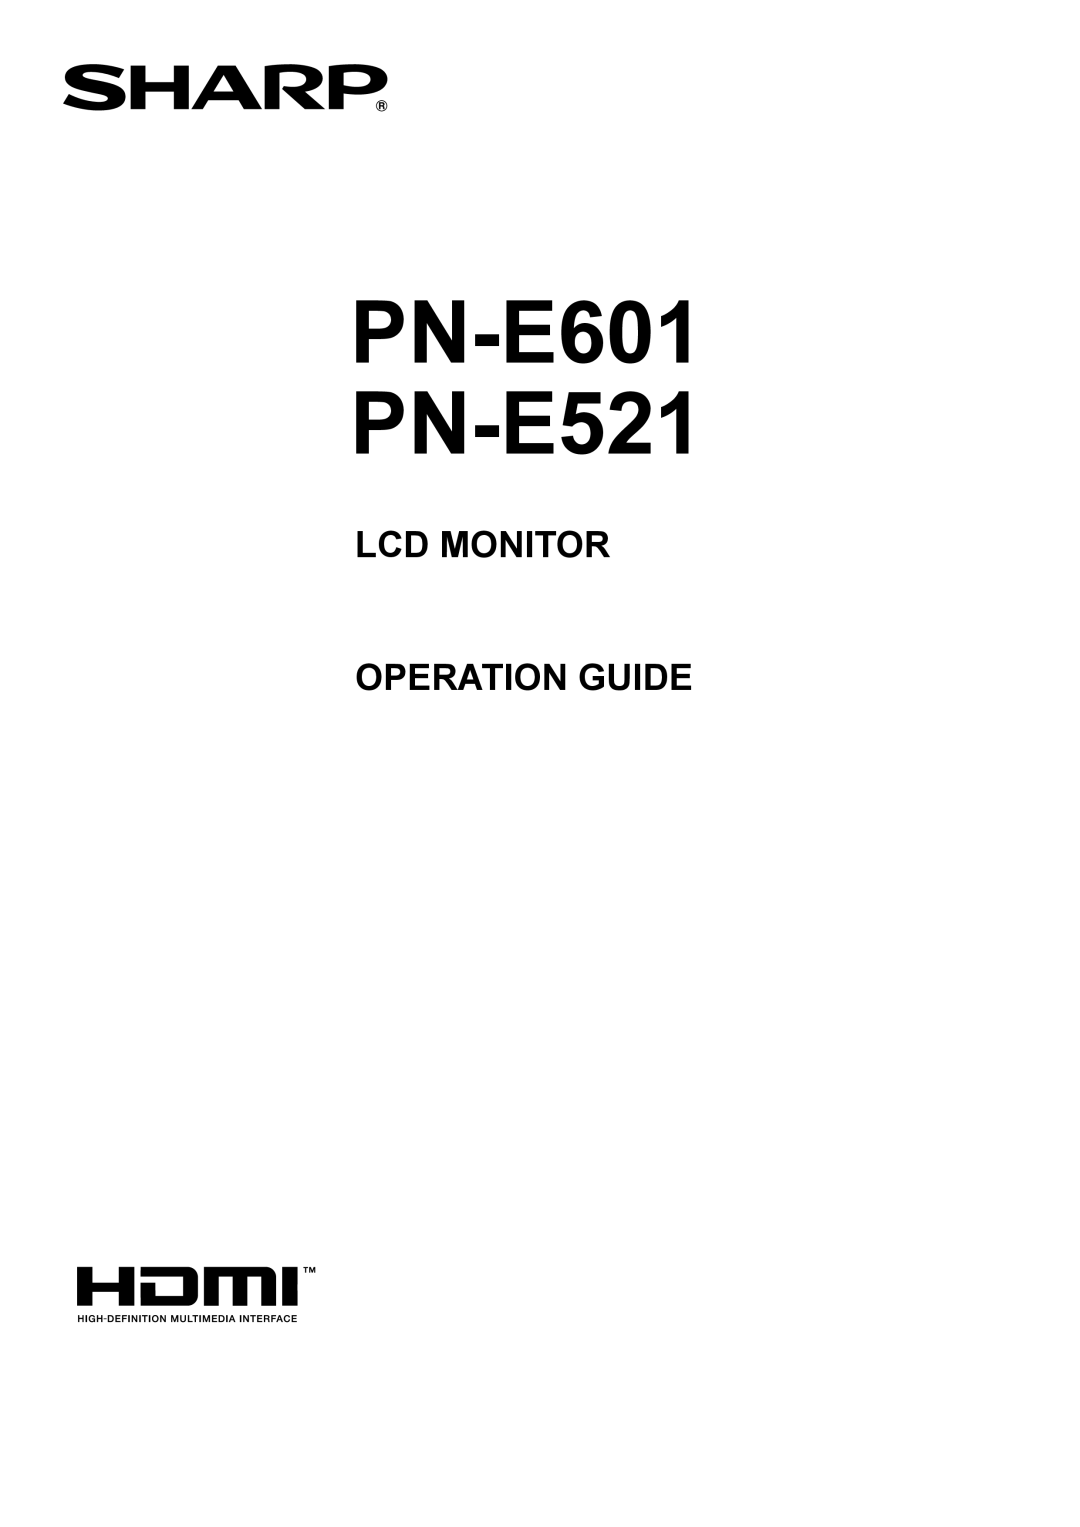 Sharp manual PN-E601 PN-E521, Lcd Monitor Operation Guide 